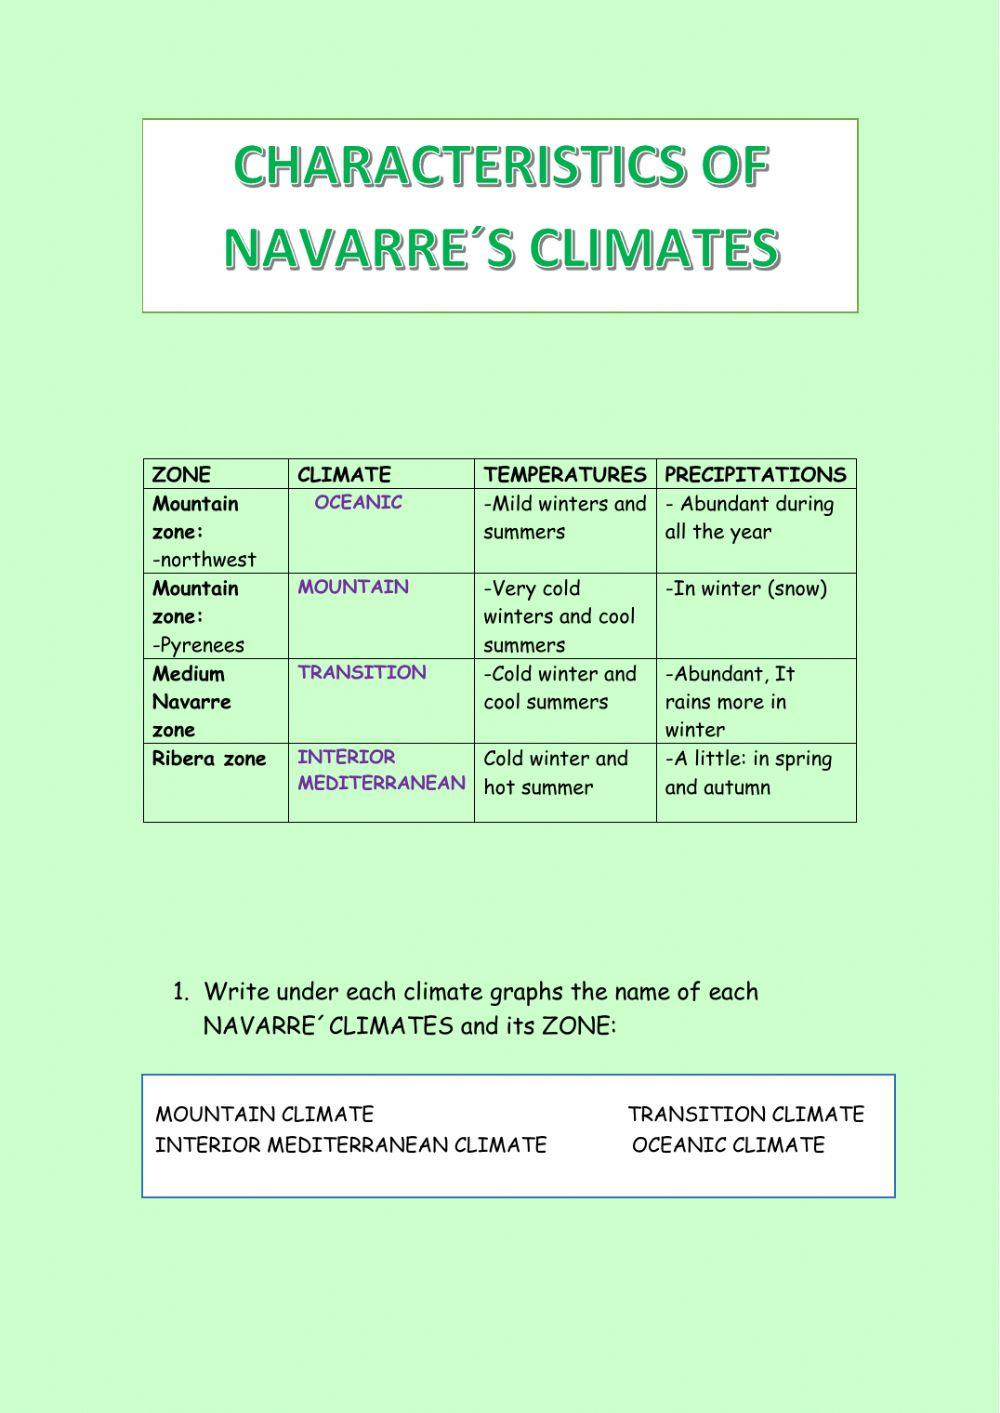 CHARACTERISTICS OF NAVARRE-S CLIMATE